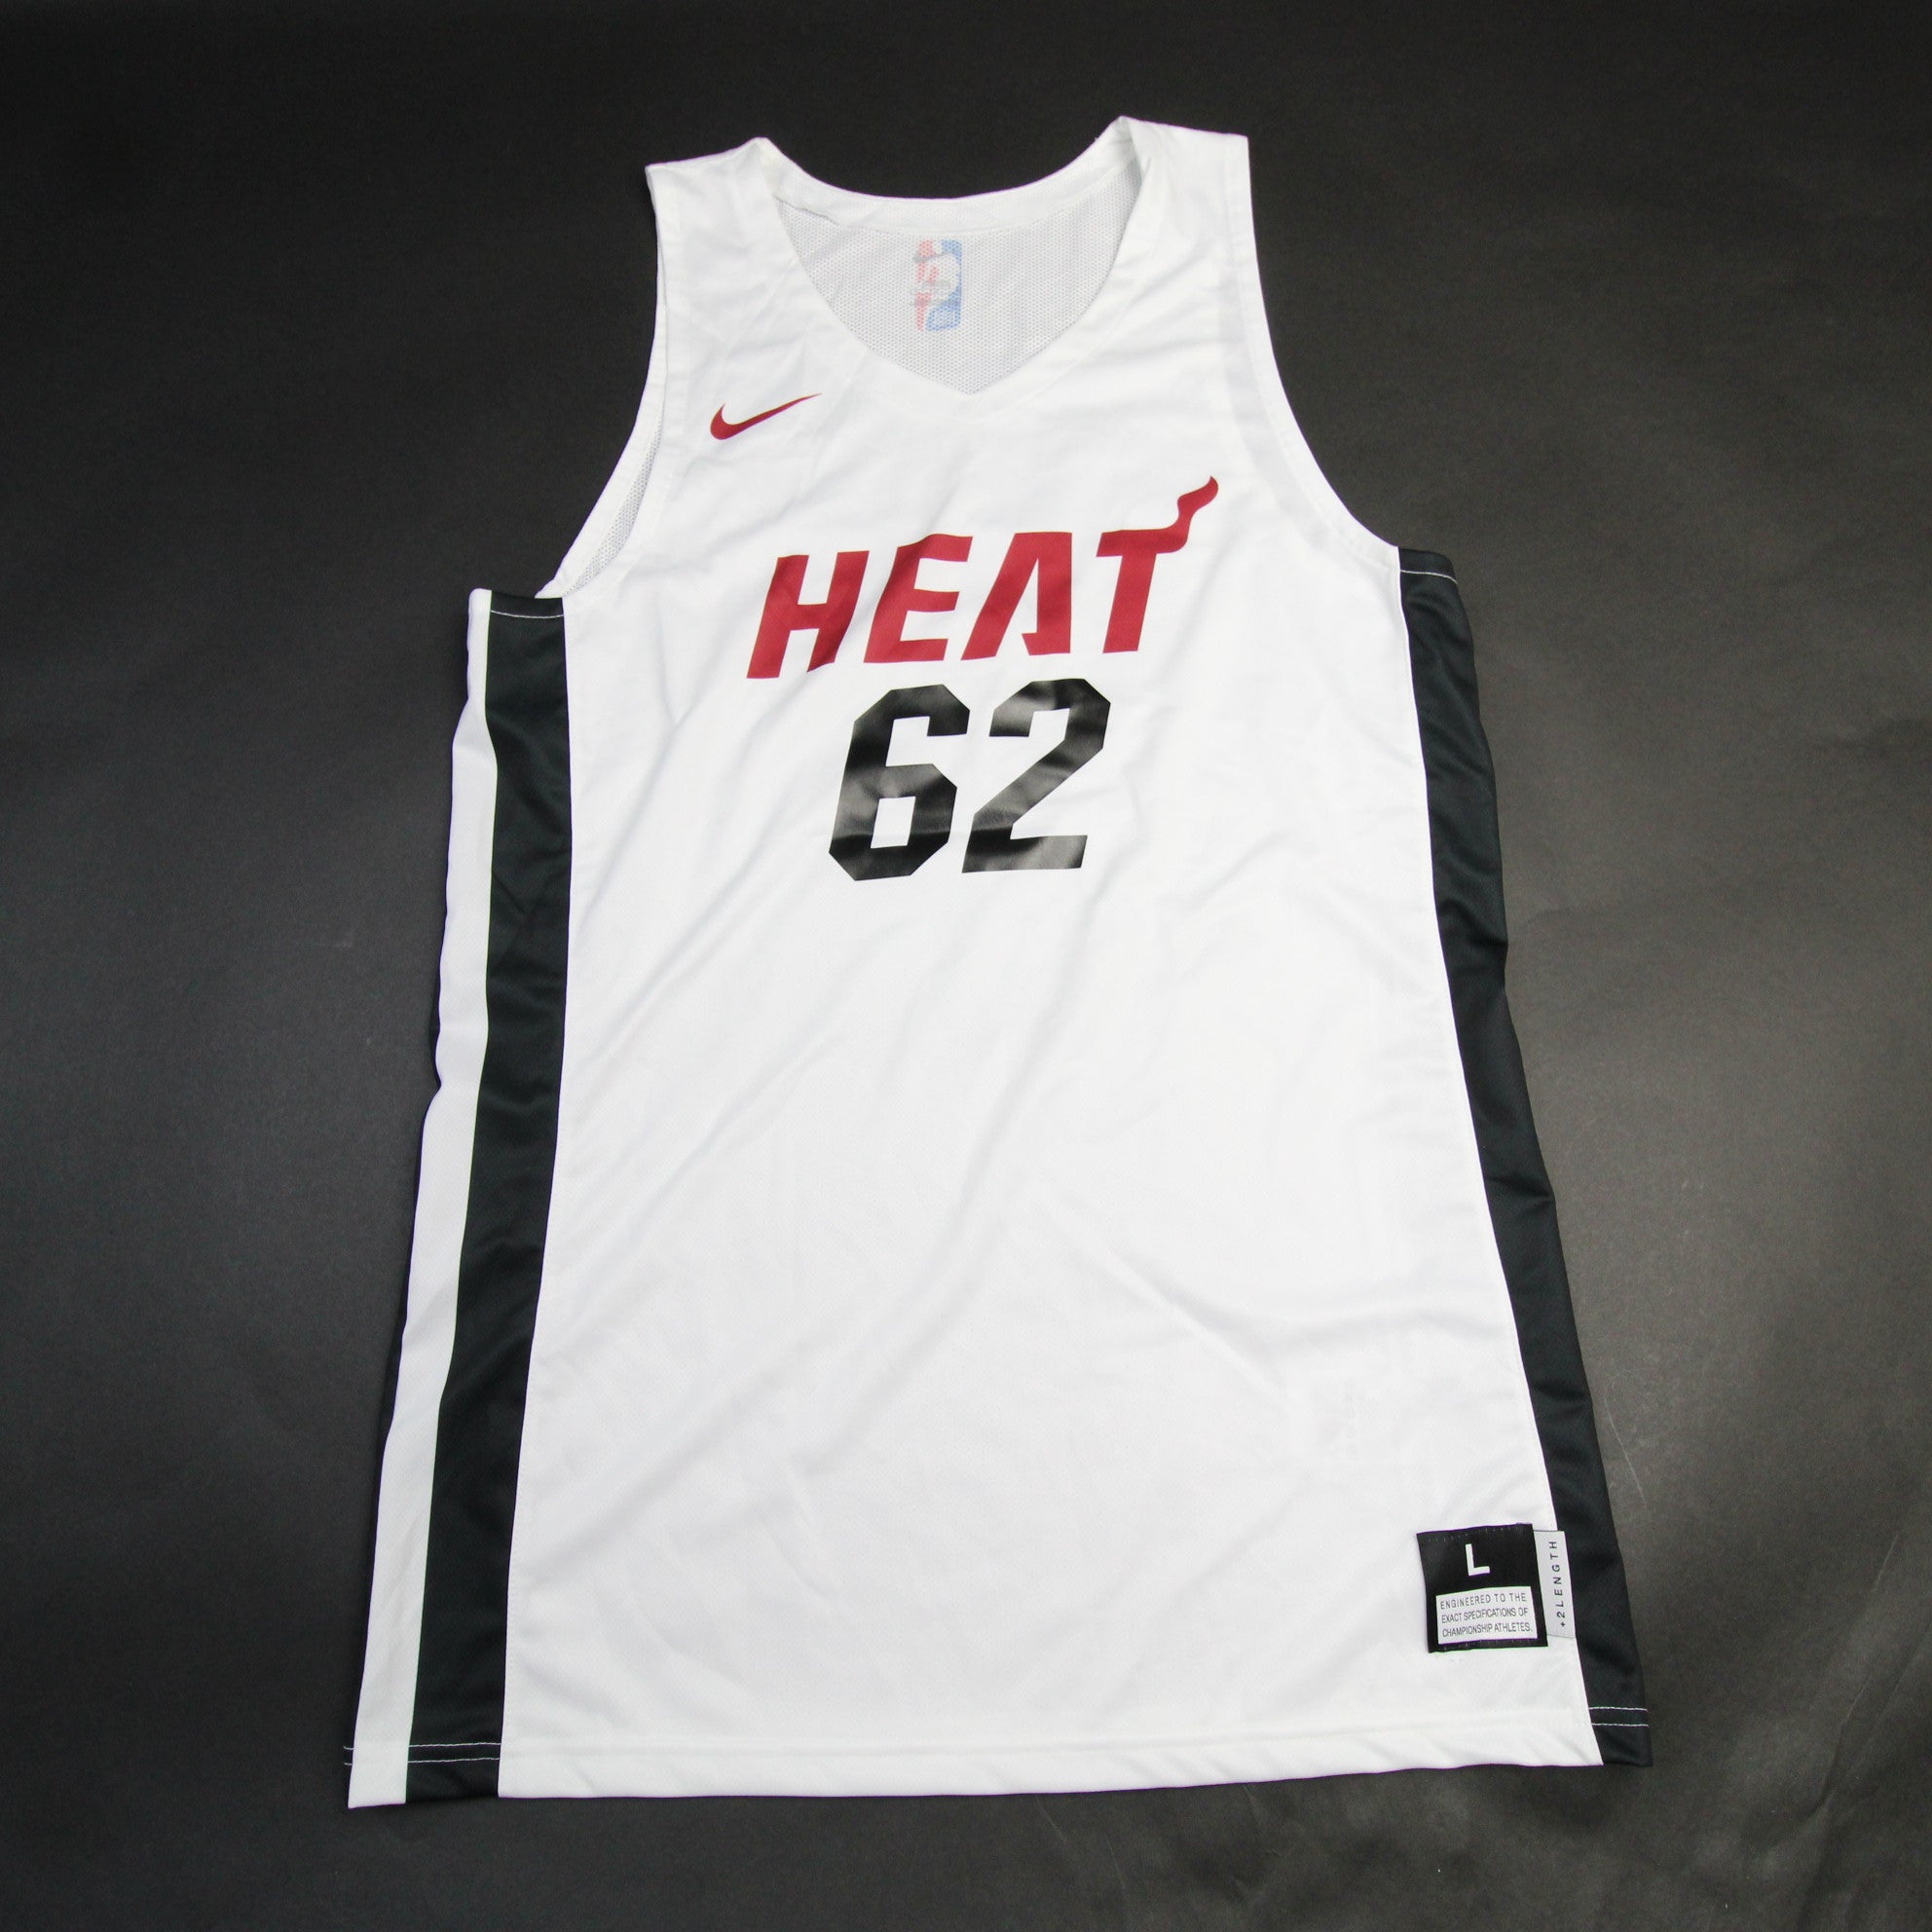 Miami Heat Nike Practice Jersey - Basketball Men's White New XLTT